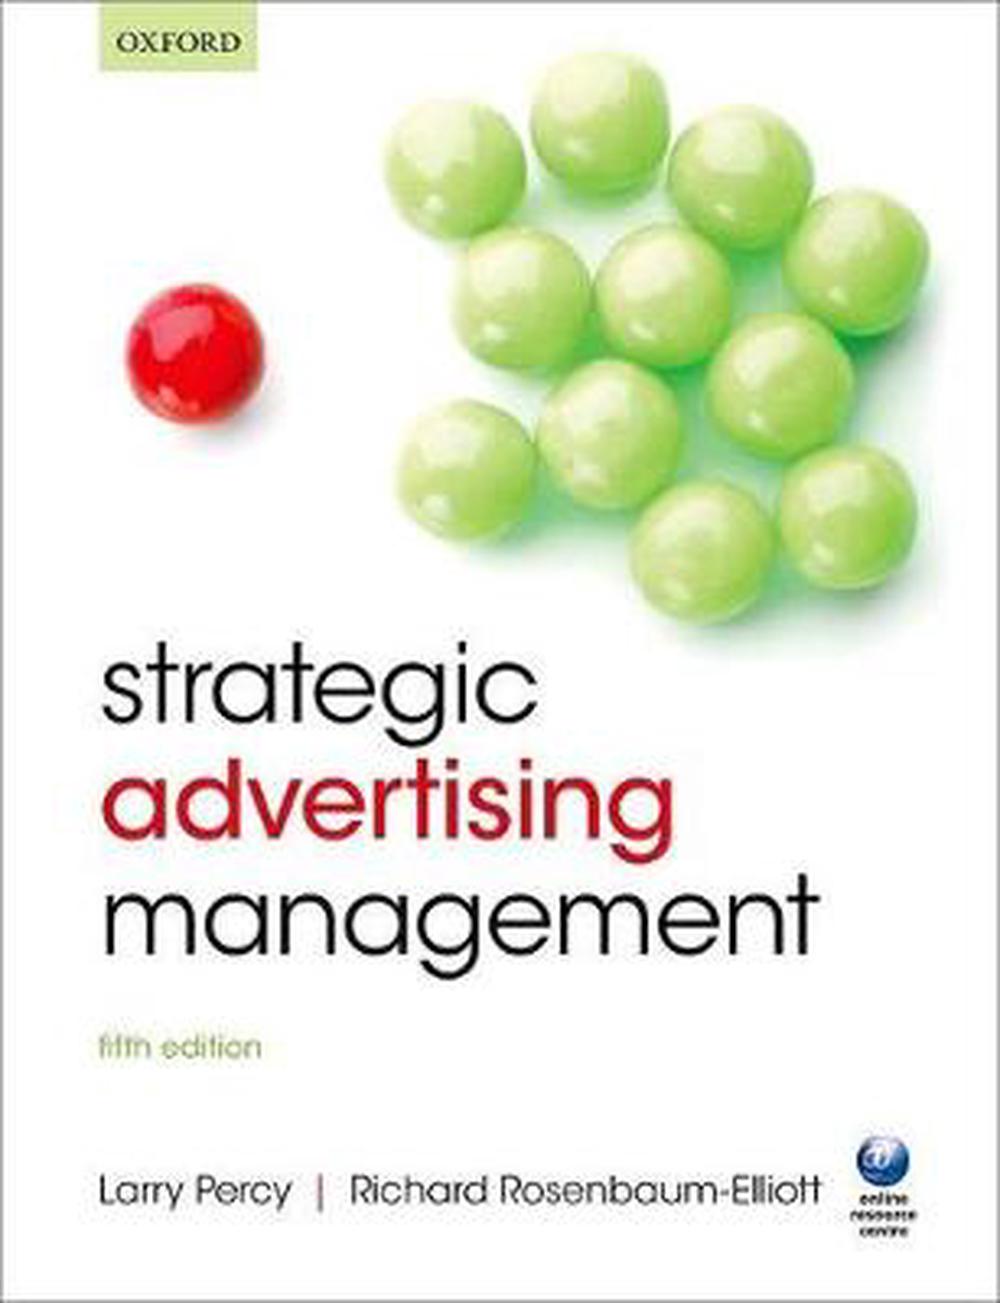 advertising management case study